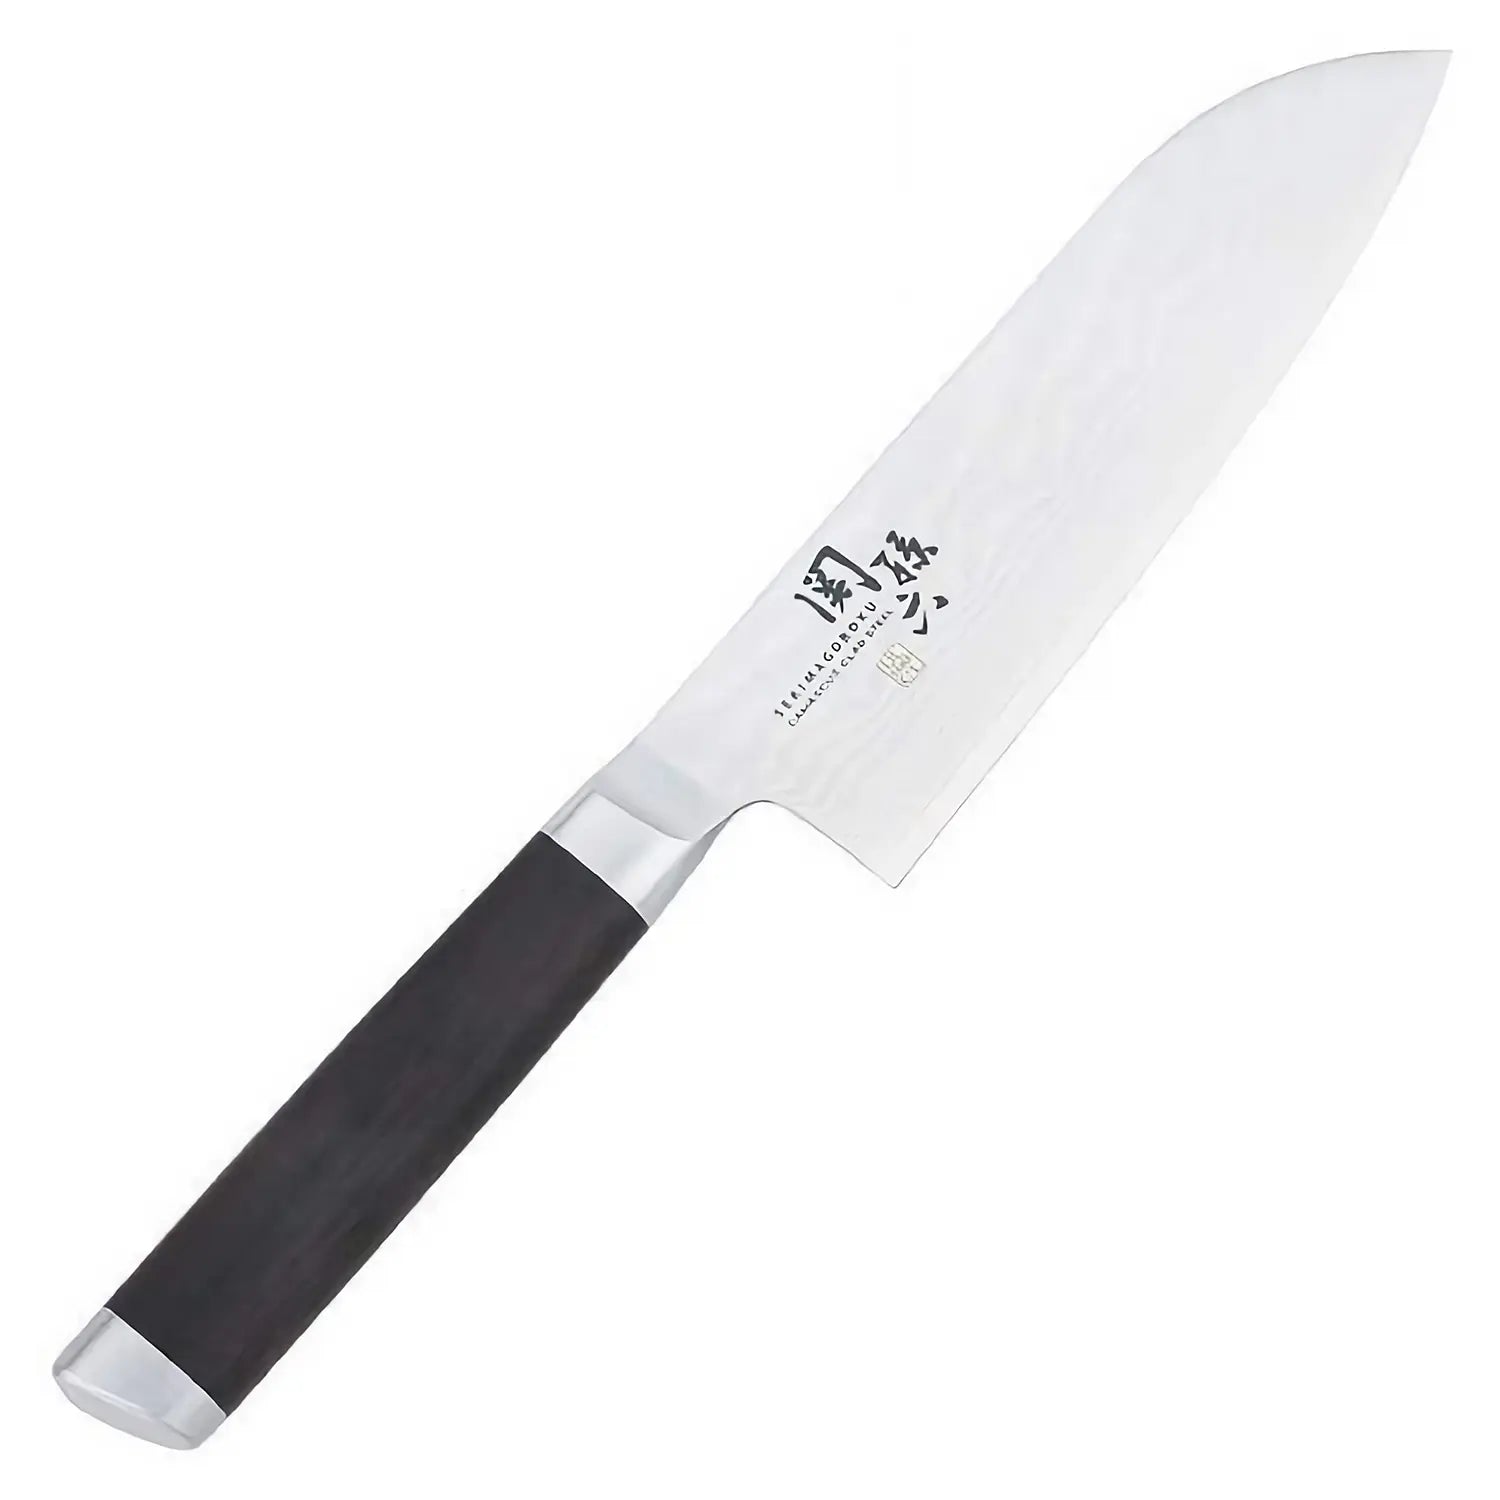 Fruit Knives Stainless Steel, Zhang Koizumi Kitchen Knife